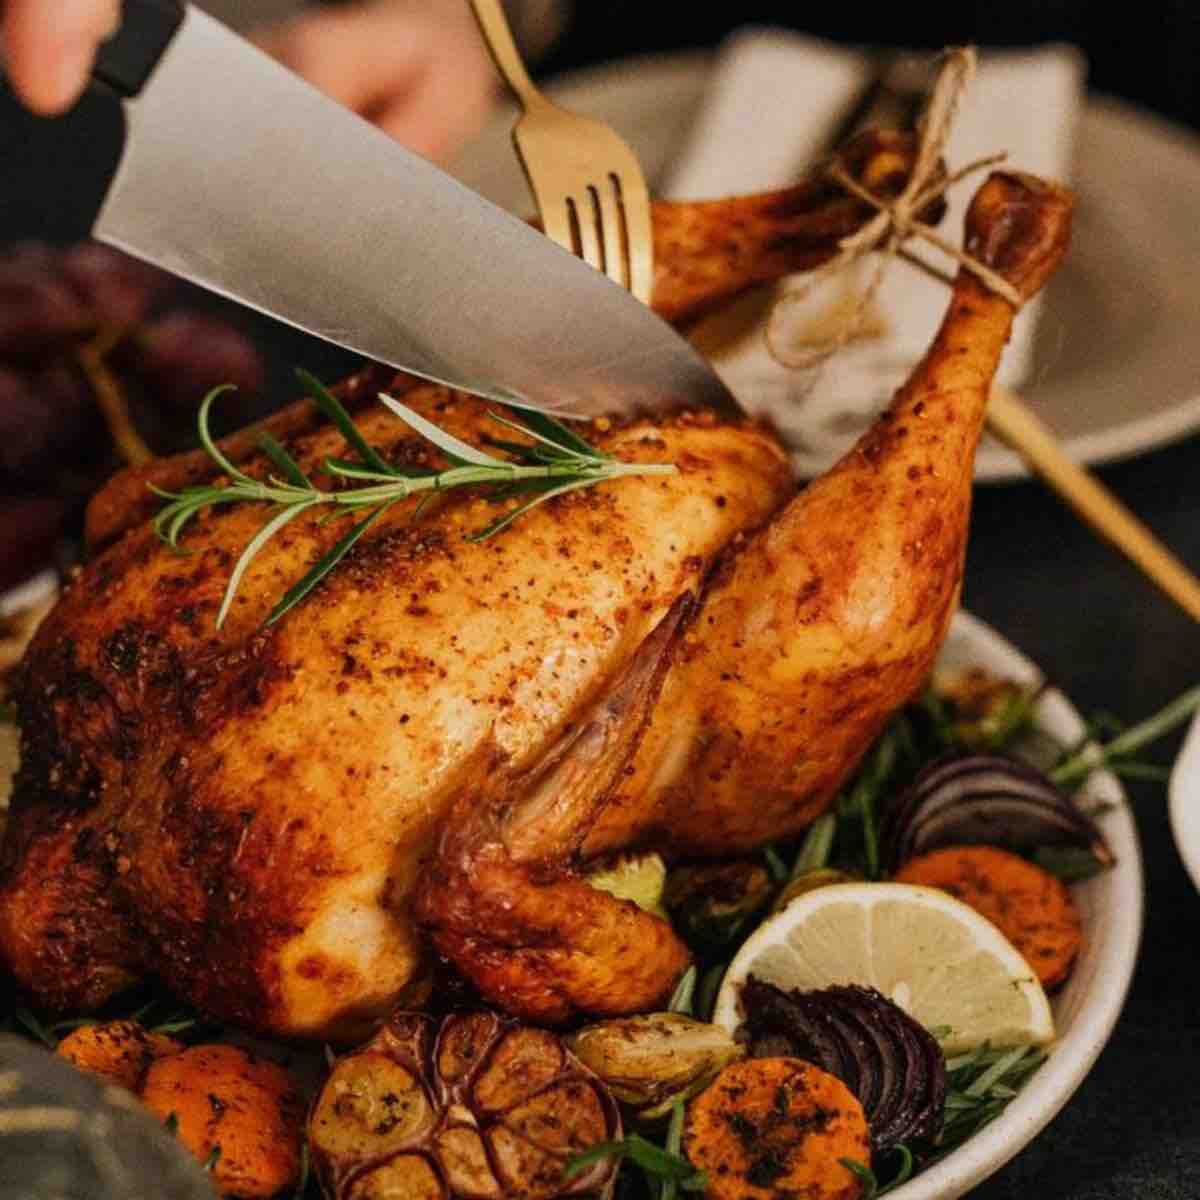 Golden roast chicken with crispy skin on a white platter, garnished with fresh herbs.